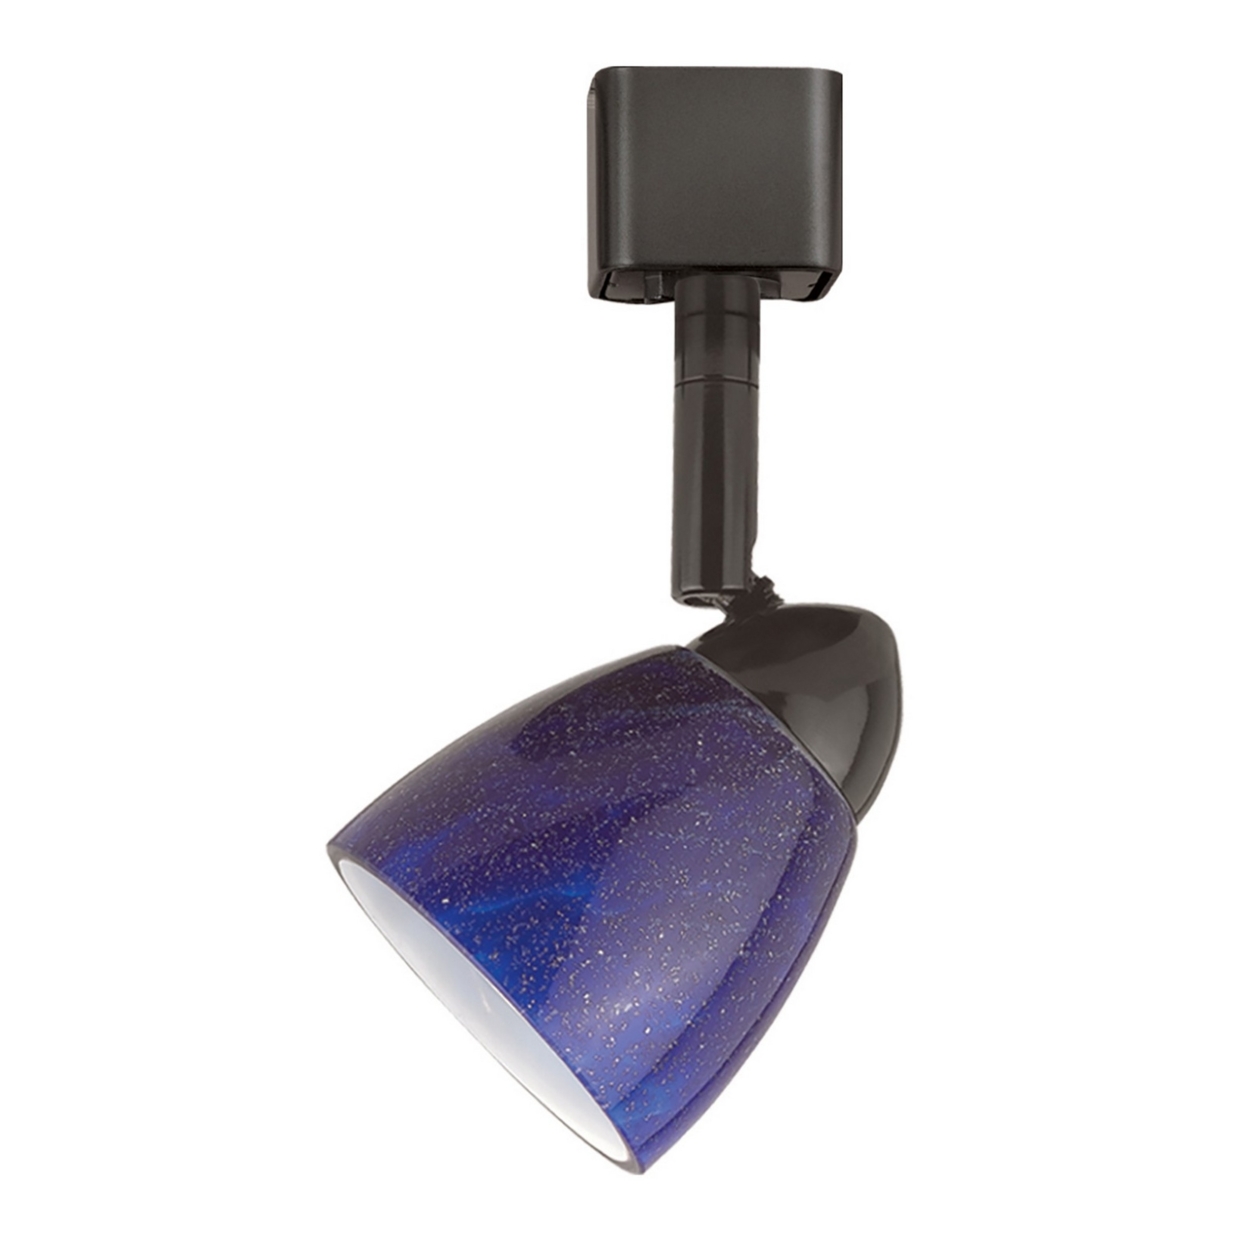 Hand Blown Glass Shade Track Light Head With Metal Frame, Blue And Bronze- Saltoro Sherpi